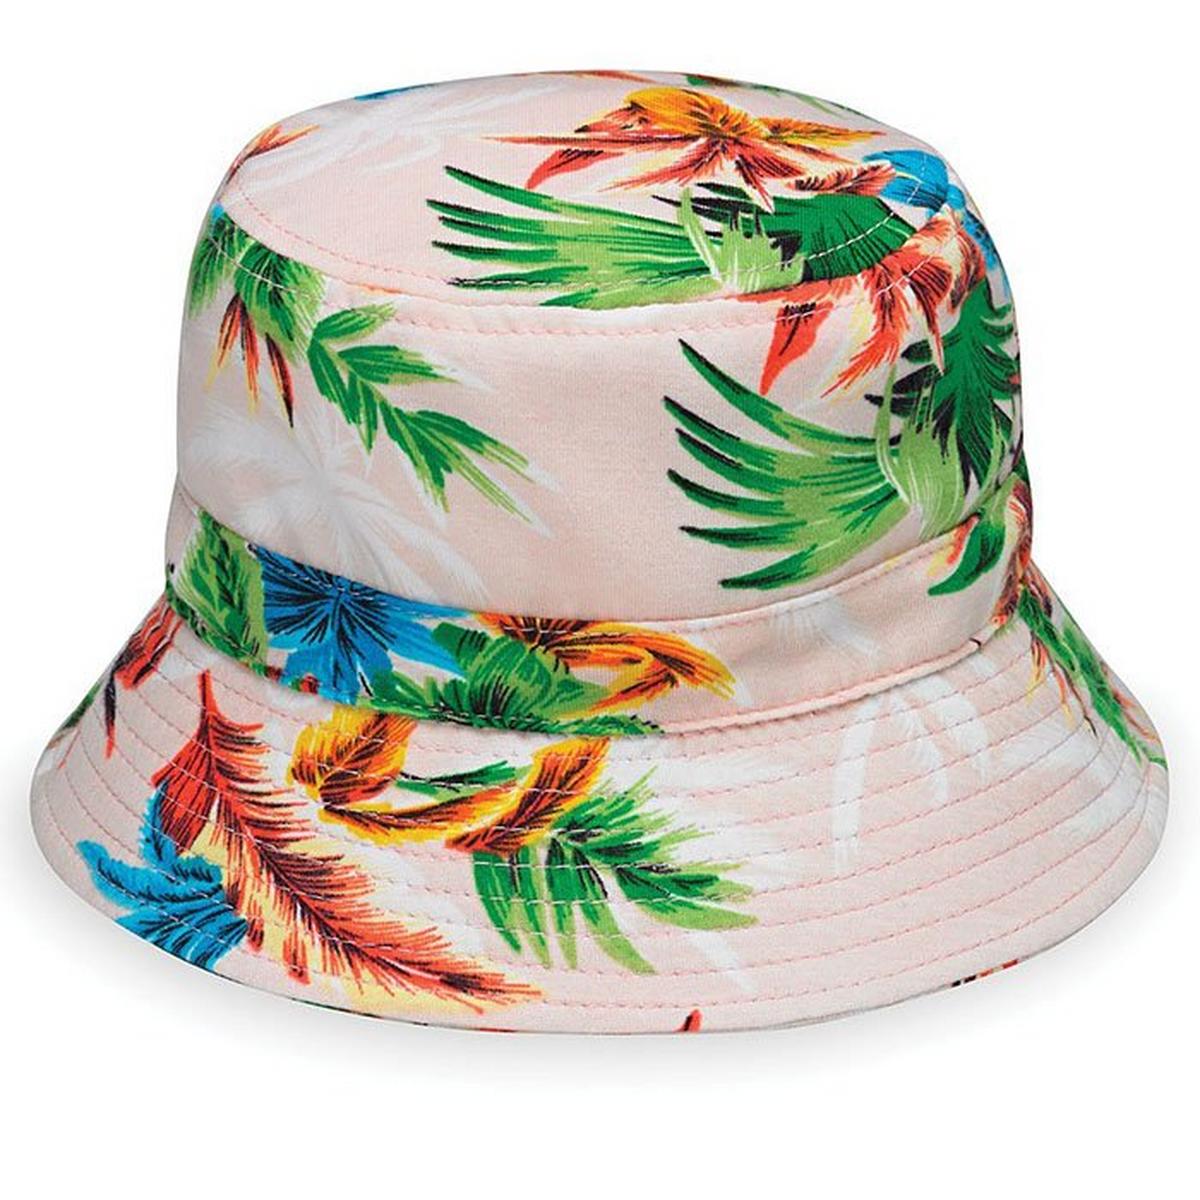 Babies' [1-3] Maui Bucket Hat